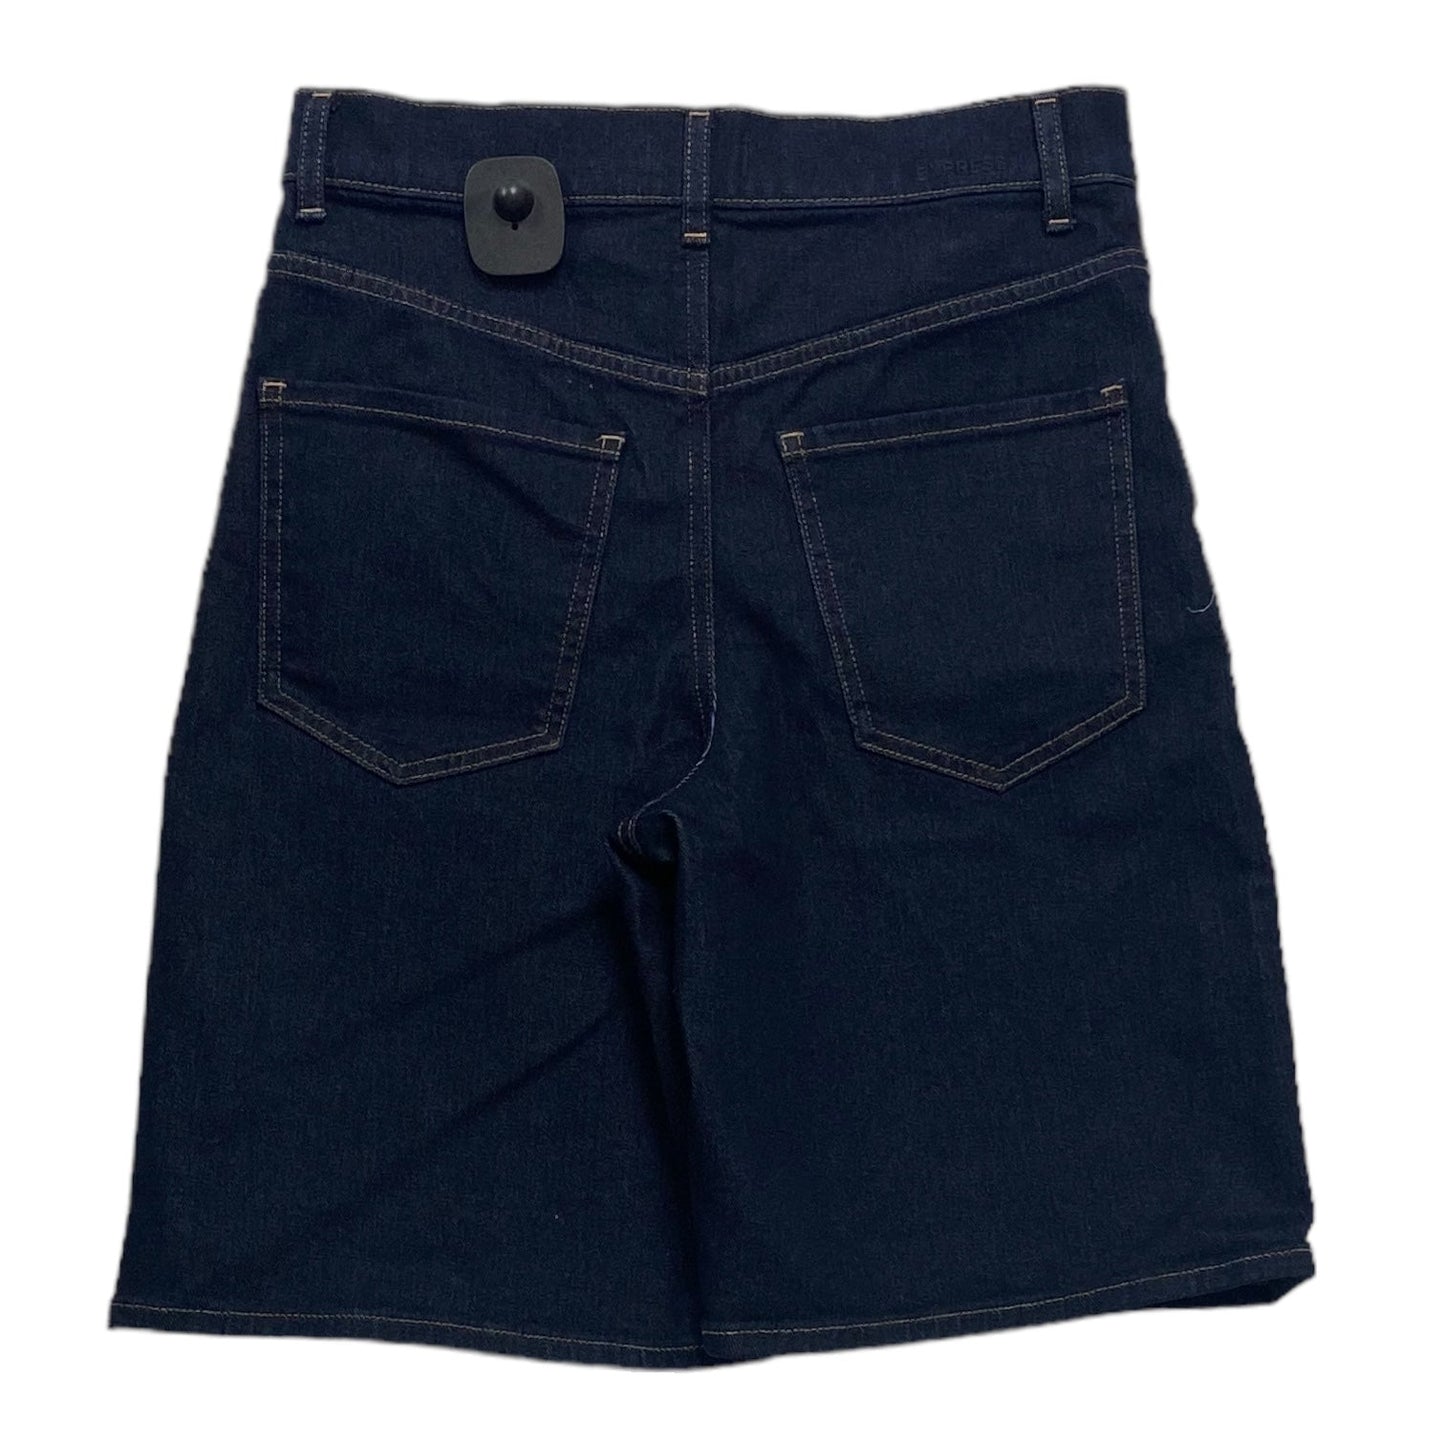 Blue Denim Shorts Express, Size 4